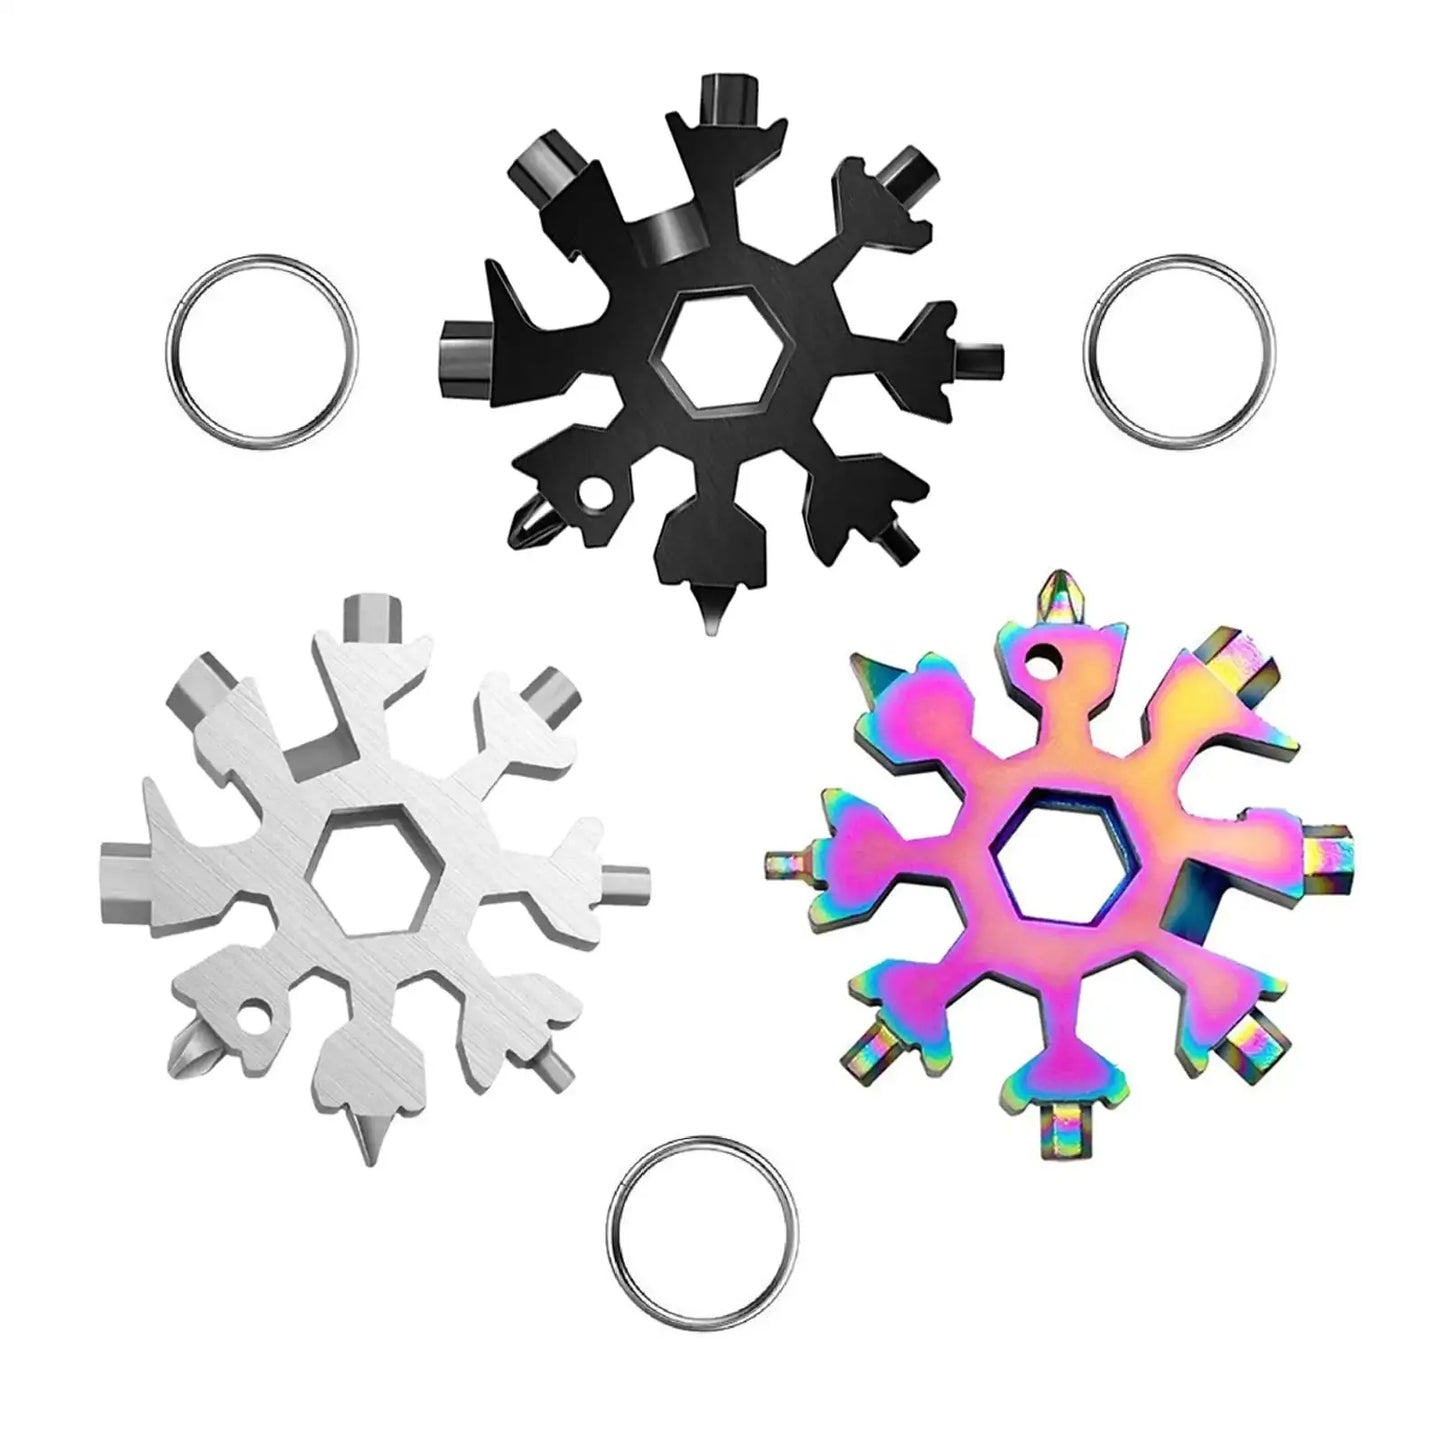 18-in-1 Multi-Tool Snowflake